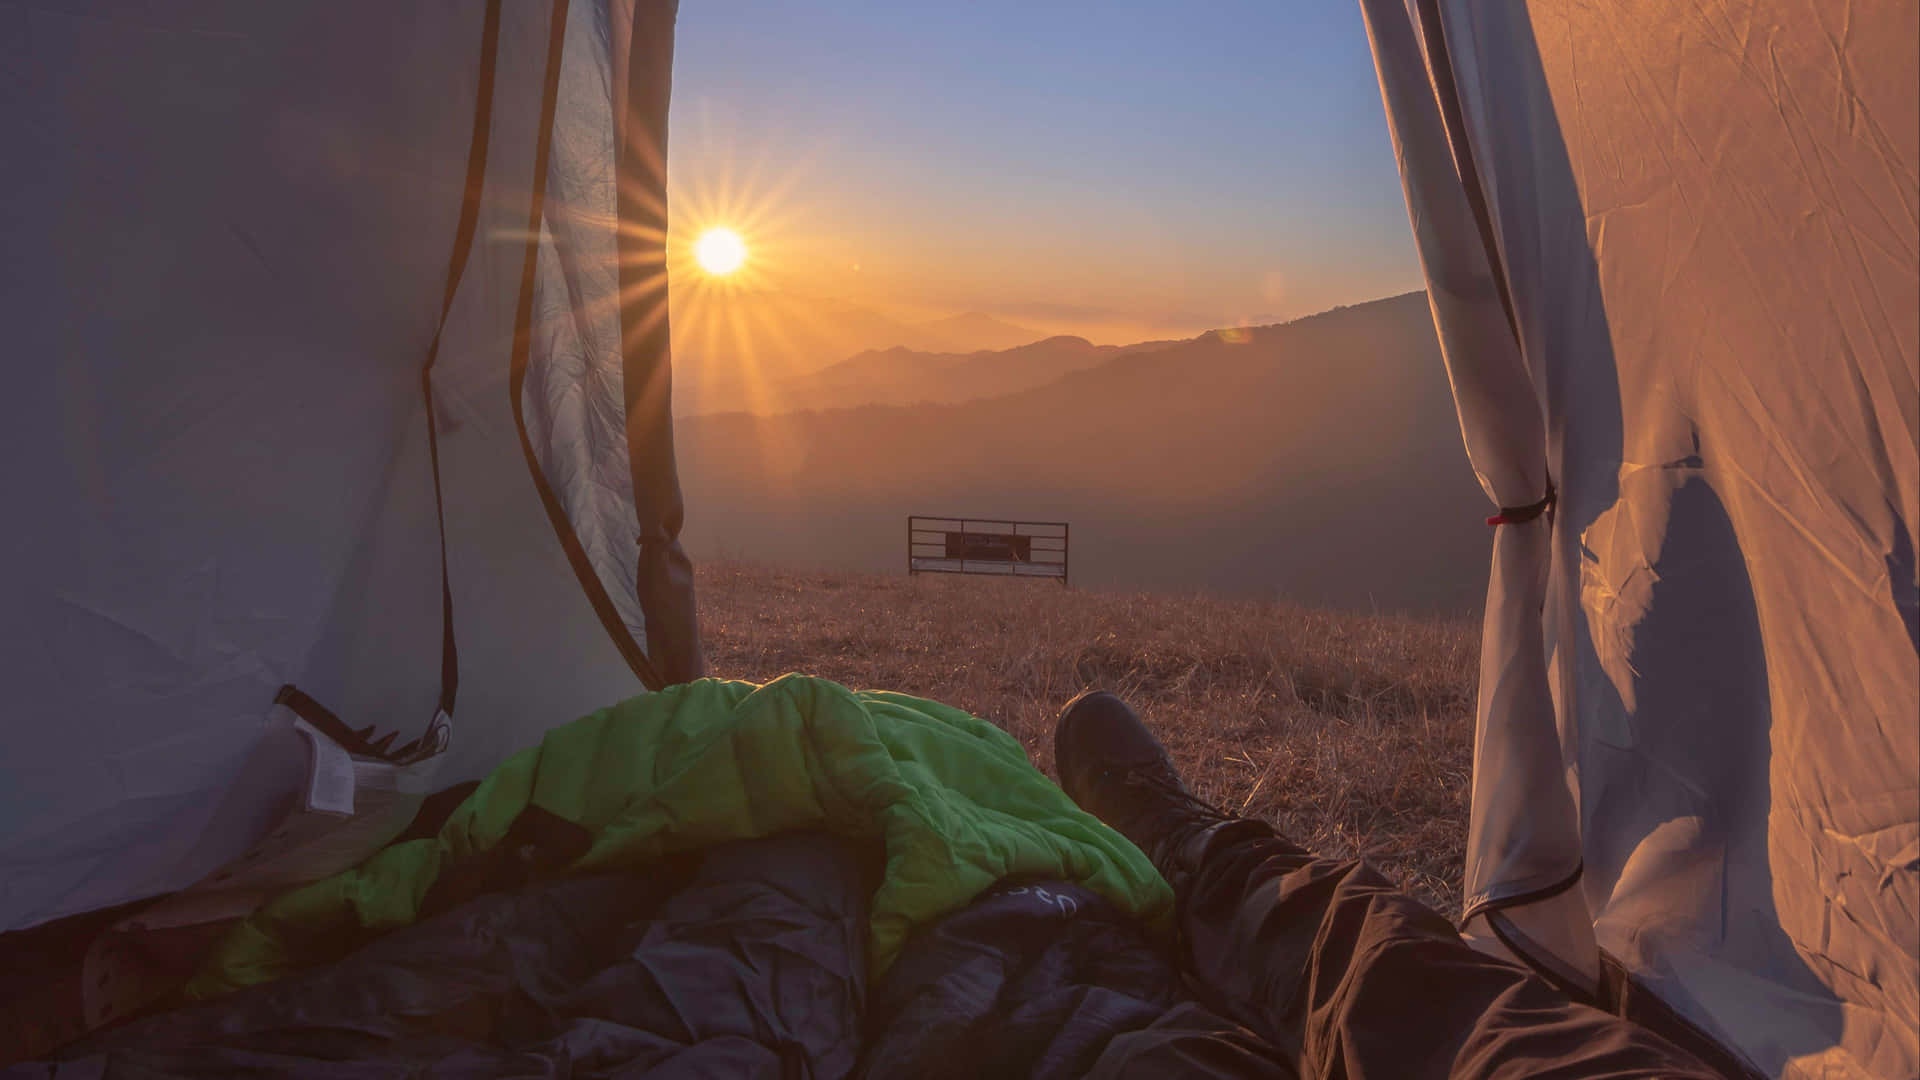 Sunrise View From Tent Camping Desktop Wallpaper